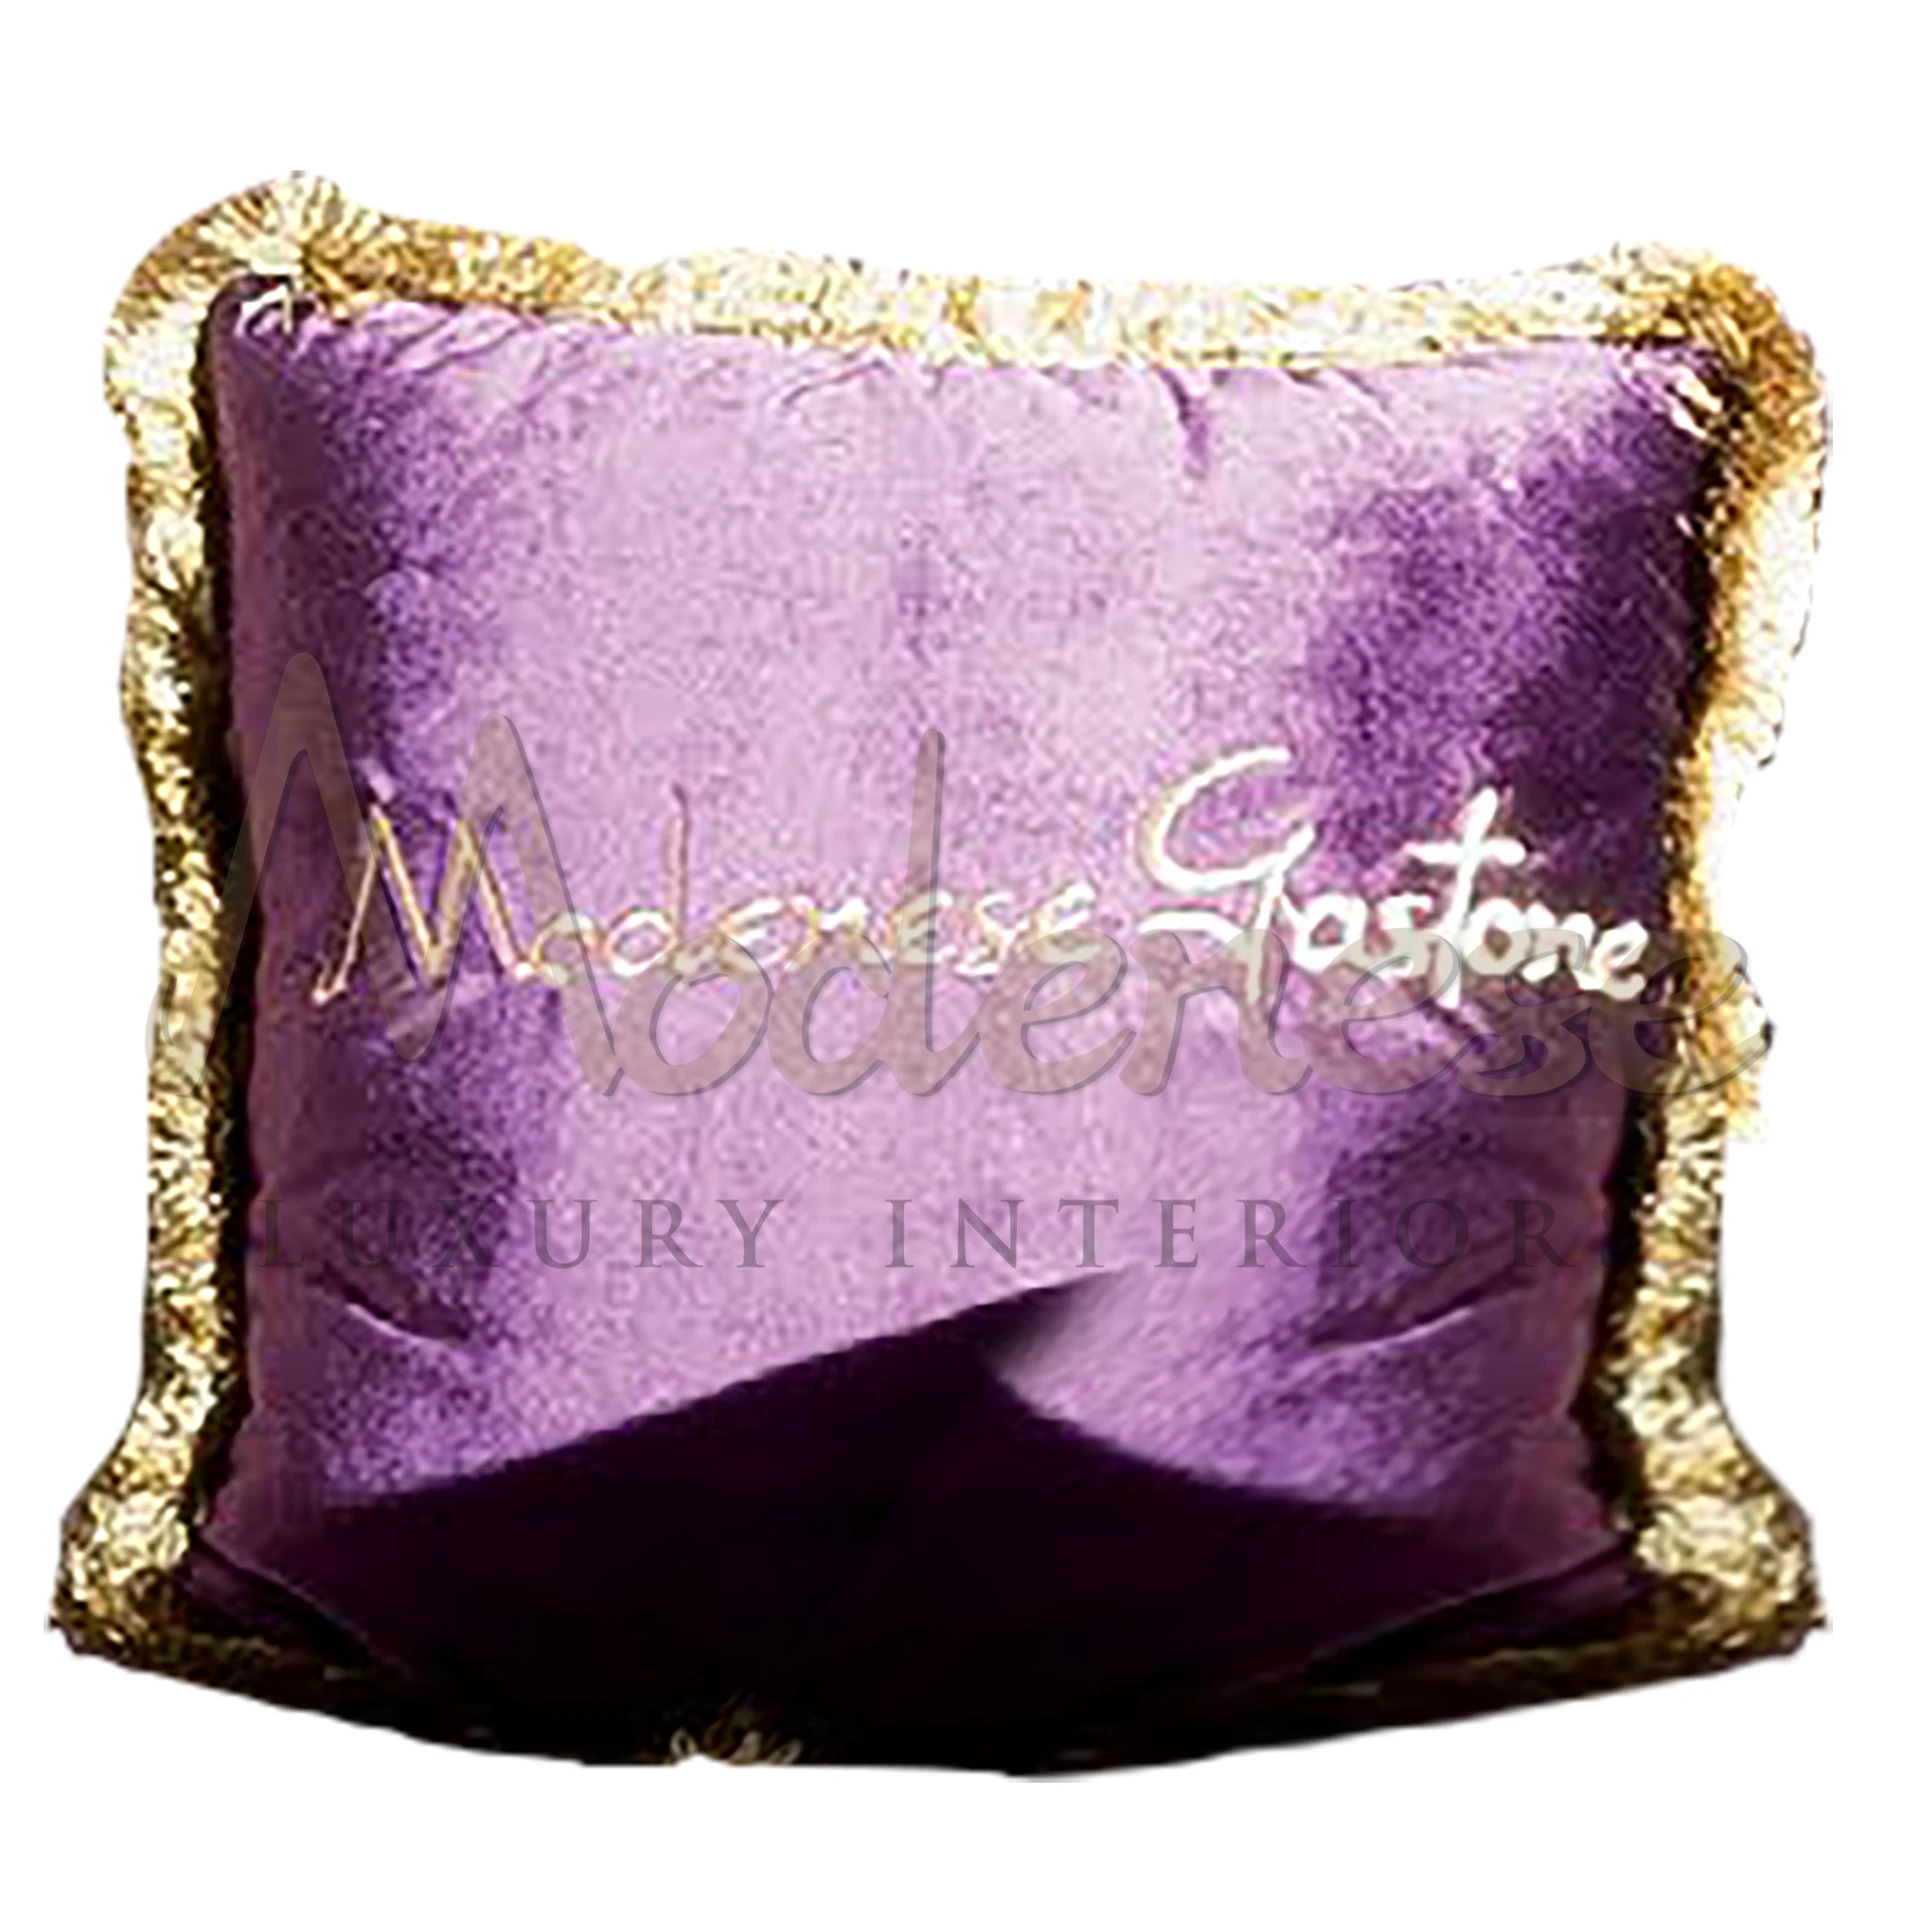 Modenese Designer Pillow: Exquisite craftsmanship and luxurious materials embodying Modenese Interiors' elegance.